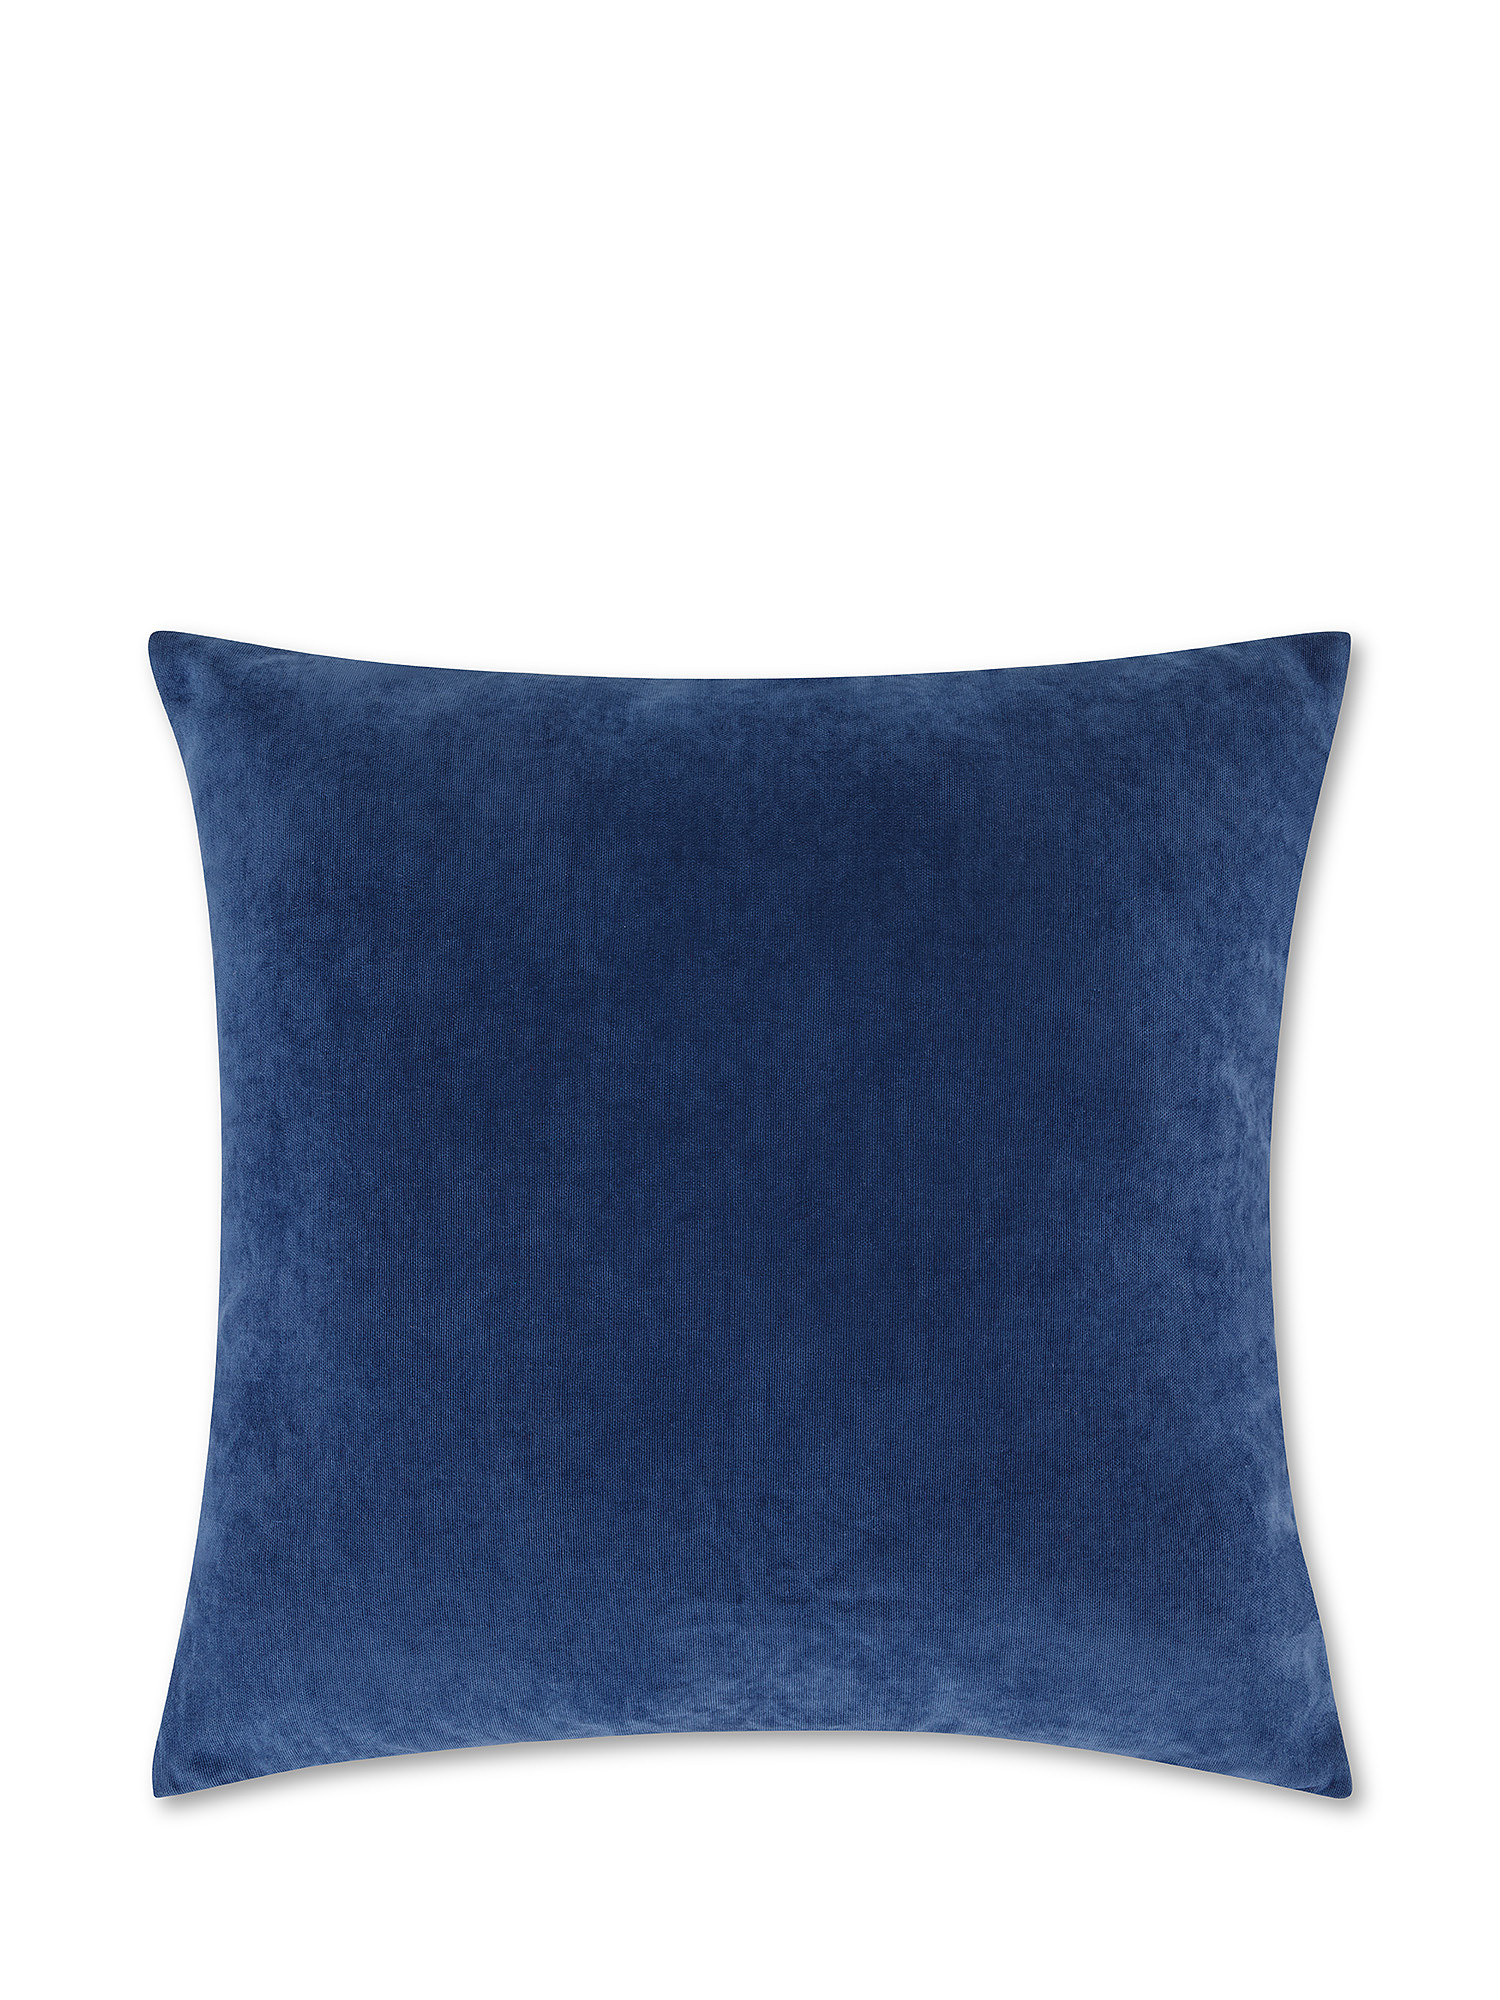 Sails print cushion 50x50cm, Light Blue, large image number 1